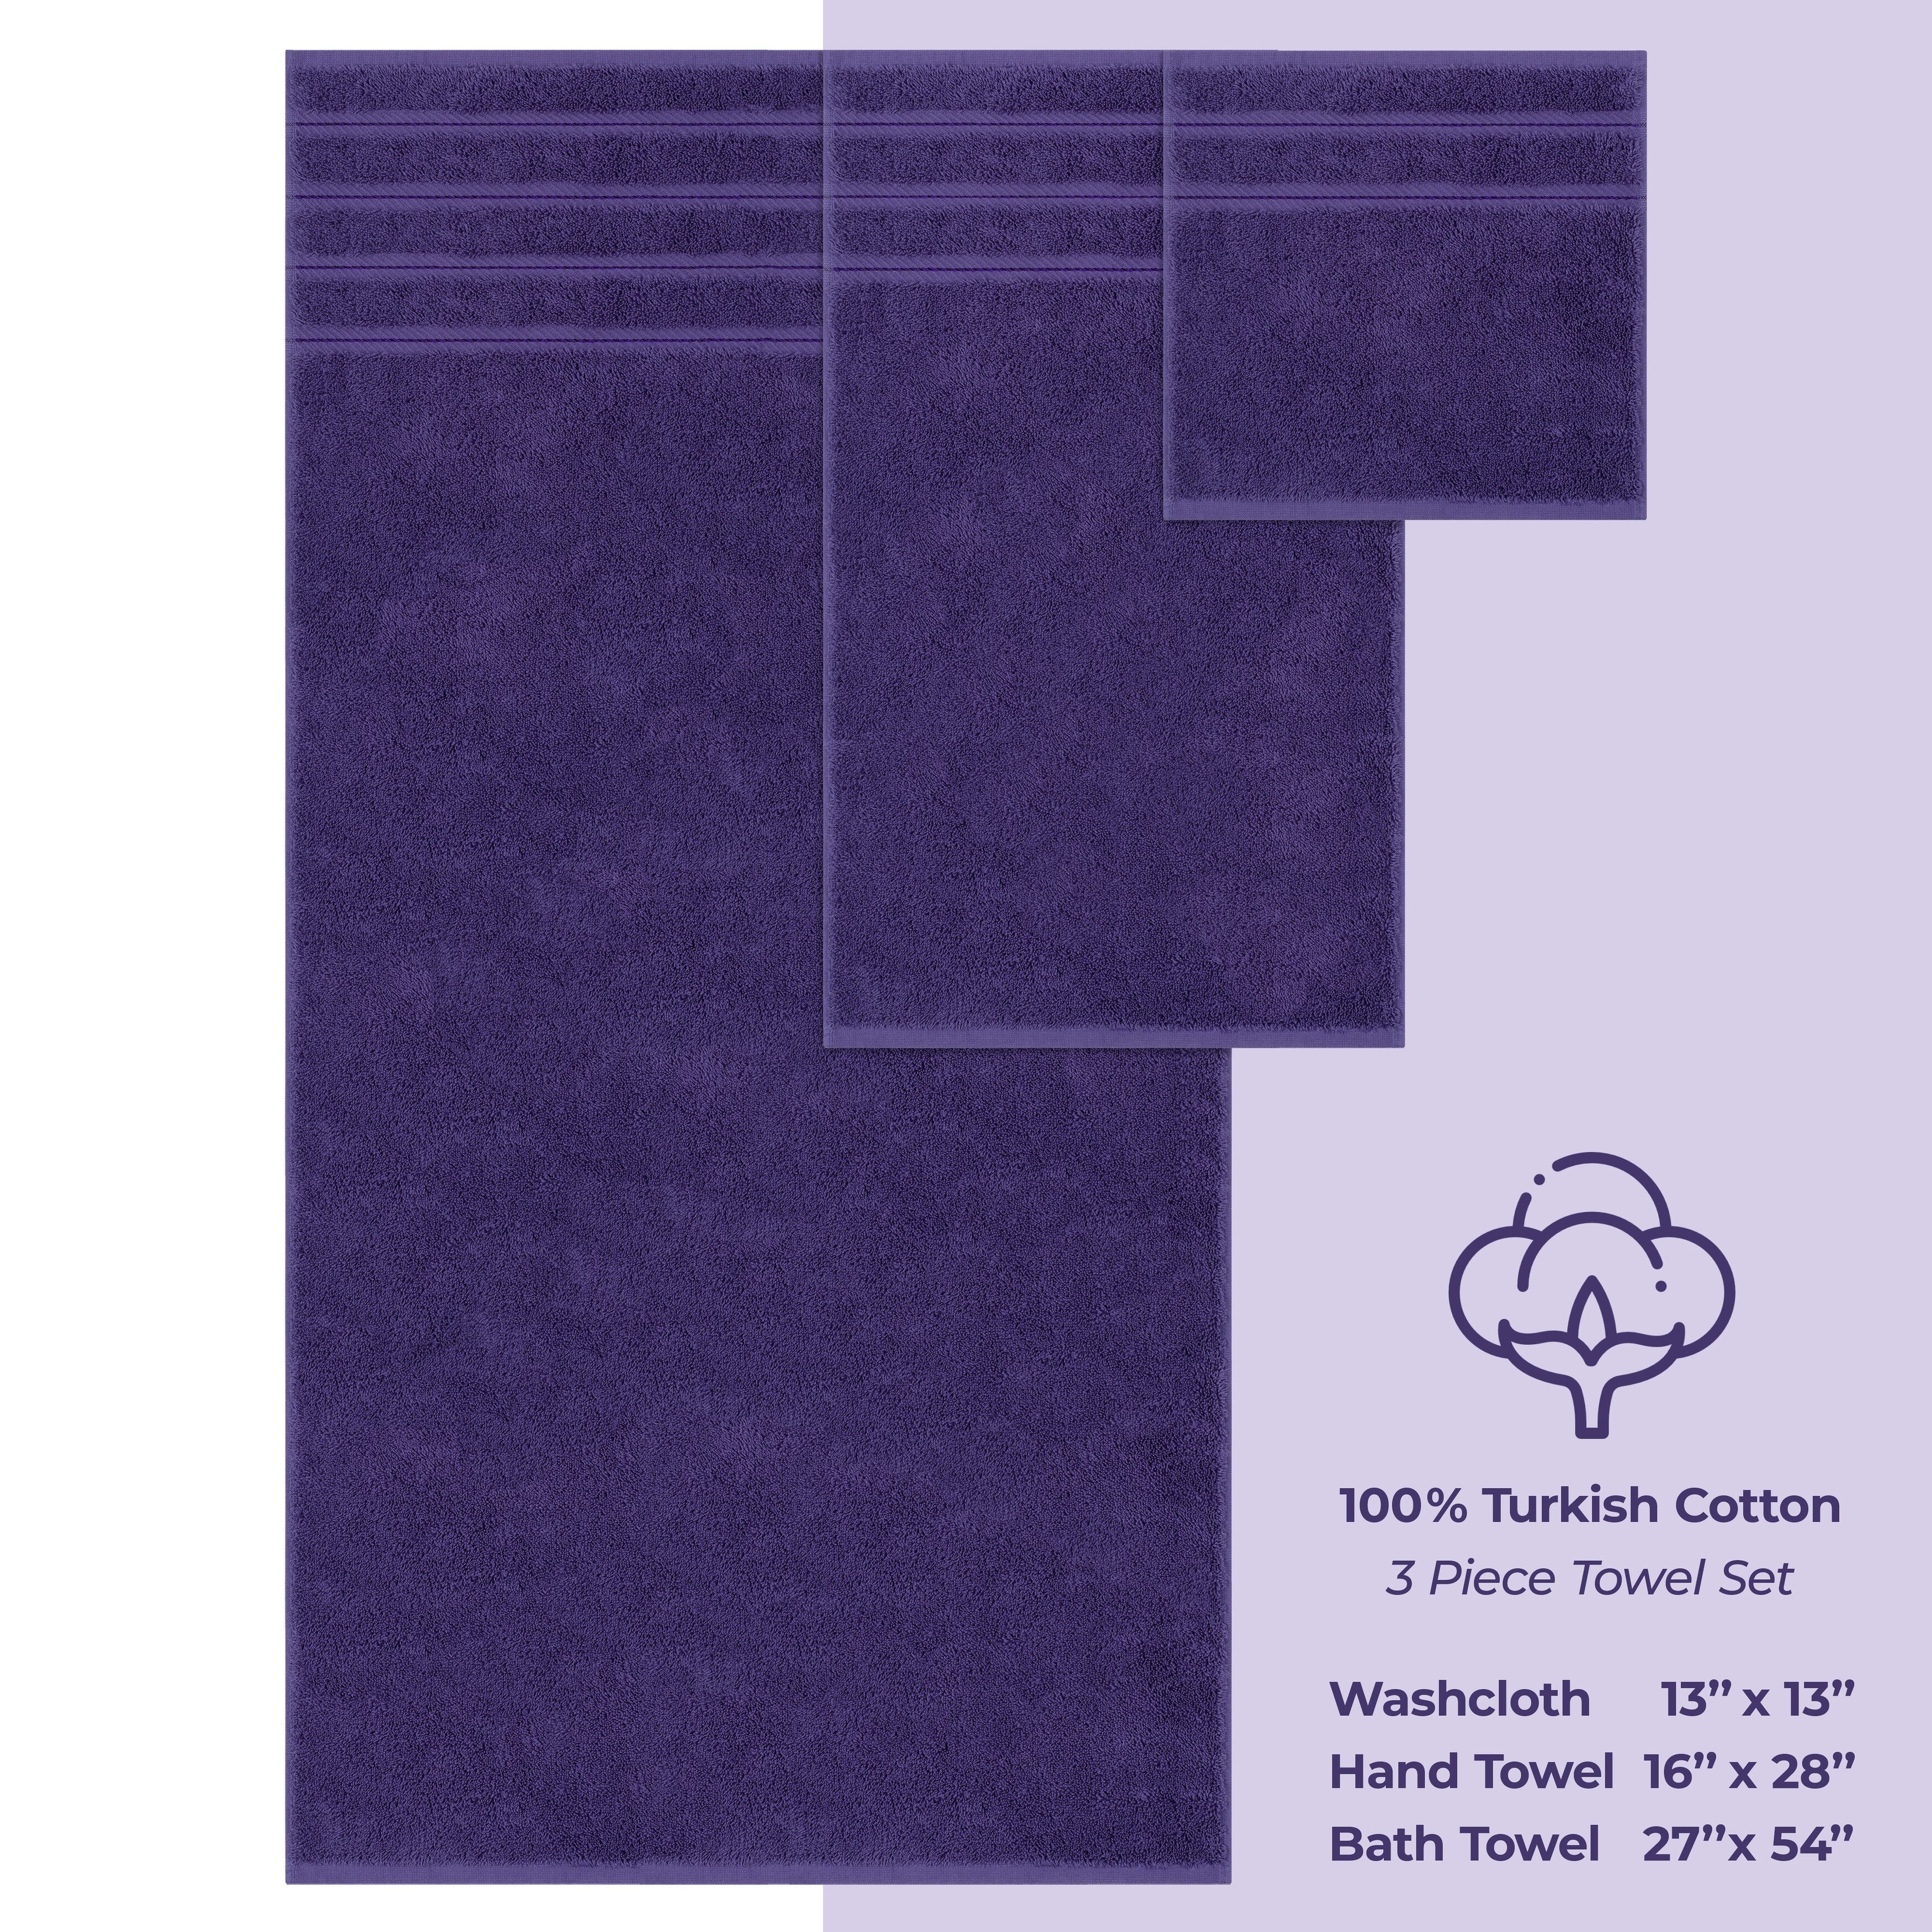 https://ak1.ostkcdn.com/images/products/is/images/direct/13a2d8e98672f9b68a98d74469205724b78ff12e/American-Soft-Linen-3-Piece%2C-100%25-Genuine-Turkish-Cotton-Premium-%26-Luxury-Towels-Bathroom-Sets.jpg